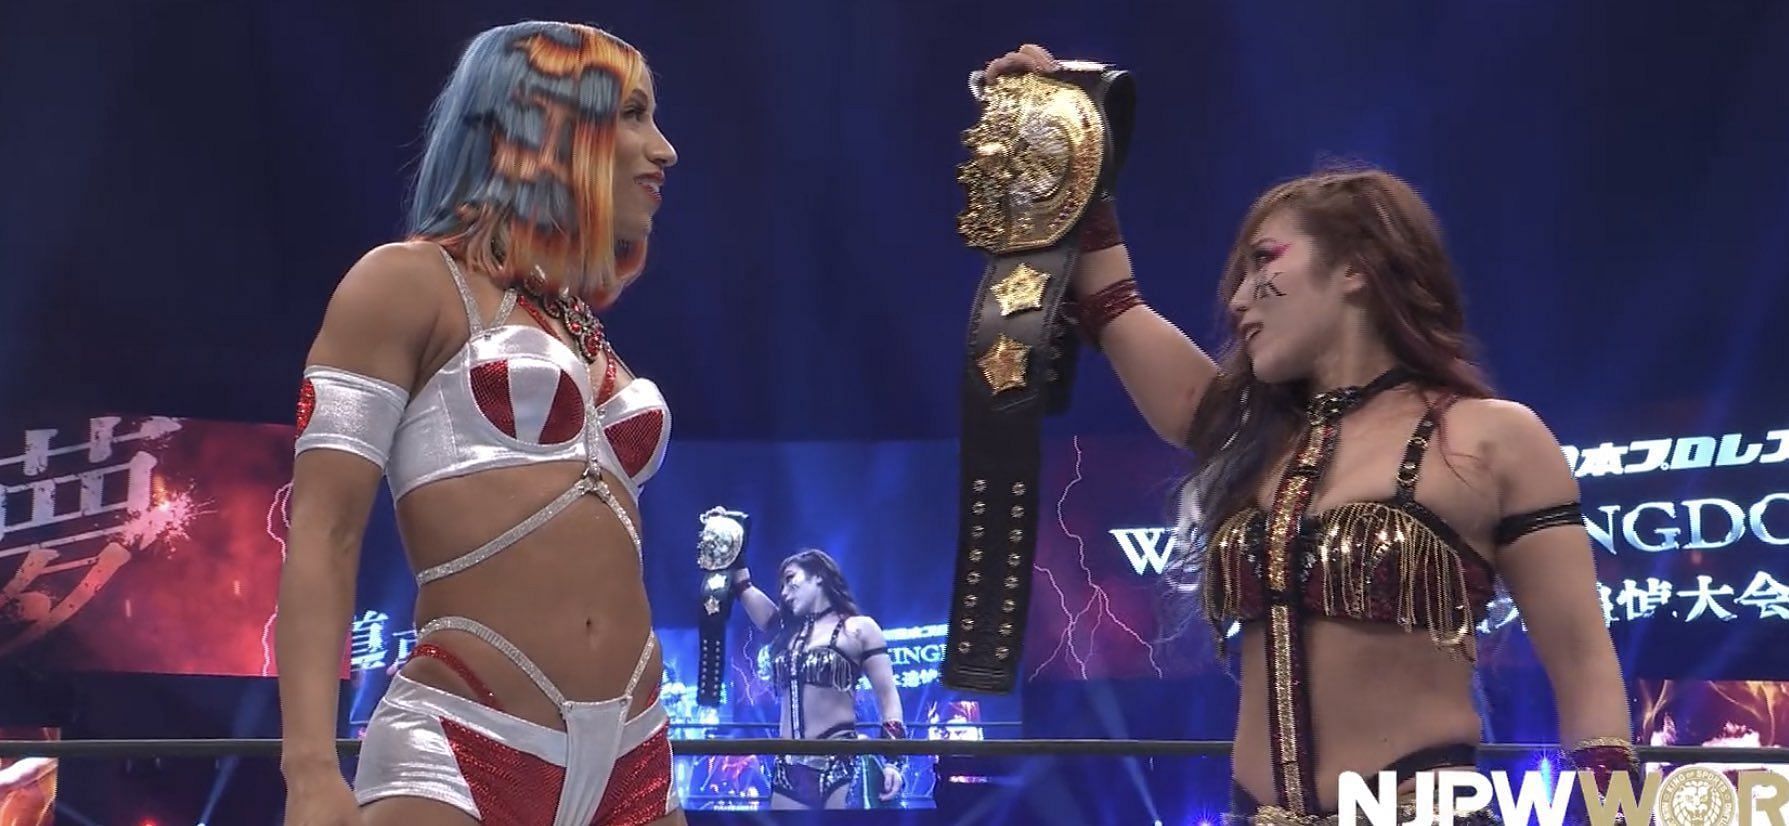 Sasha Banks debuted at NJPW WK17